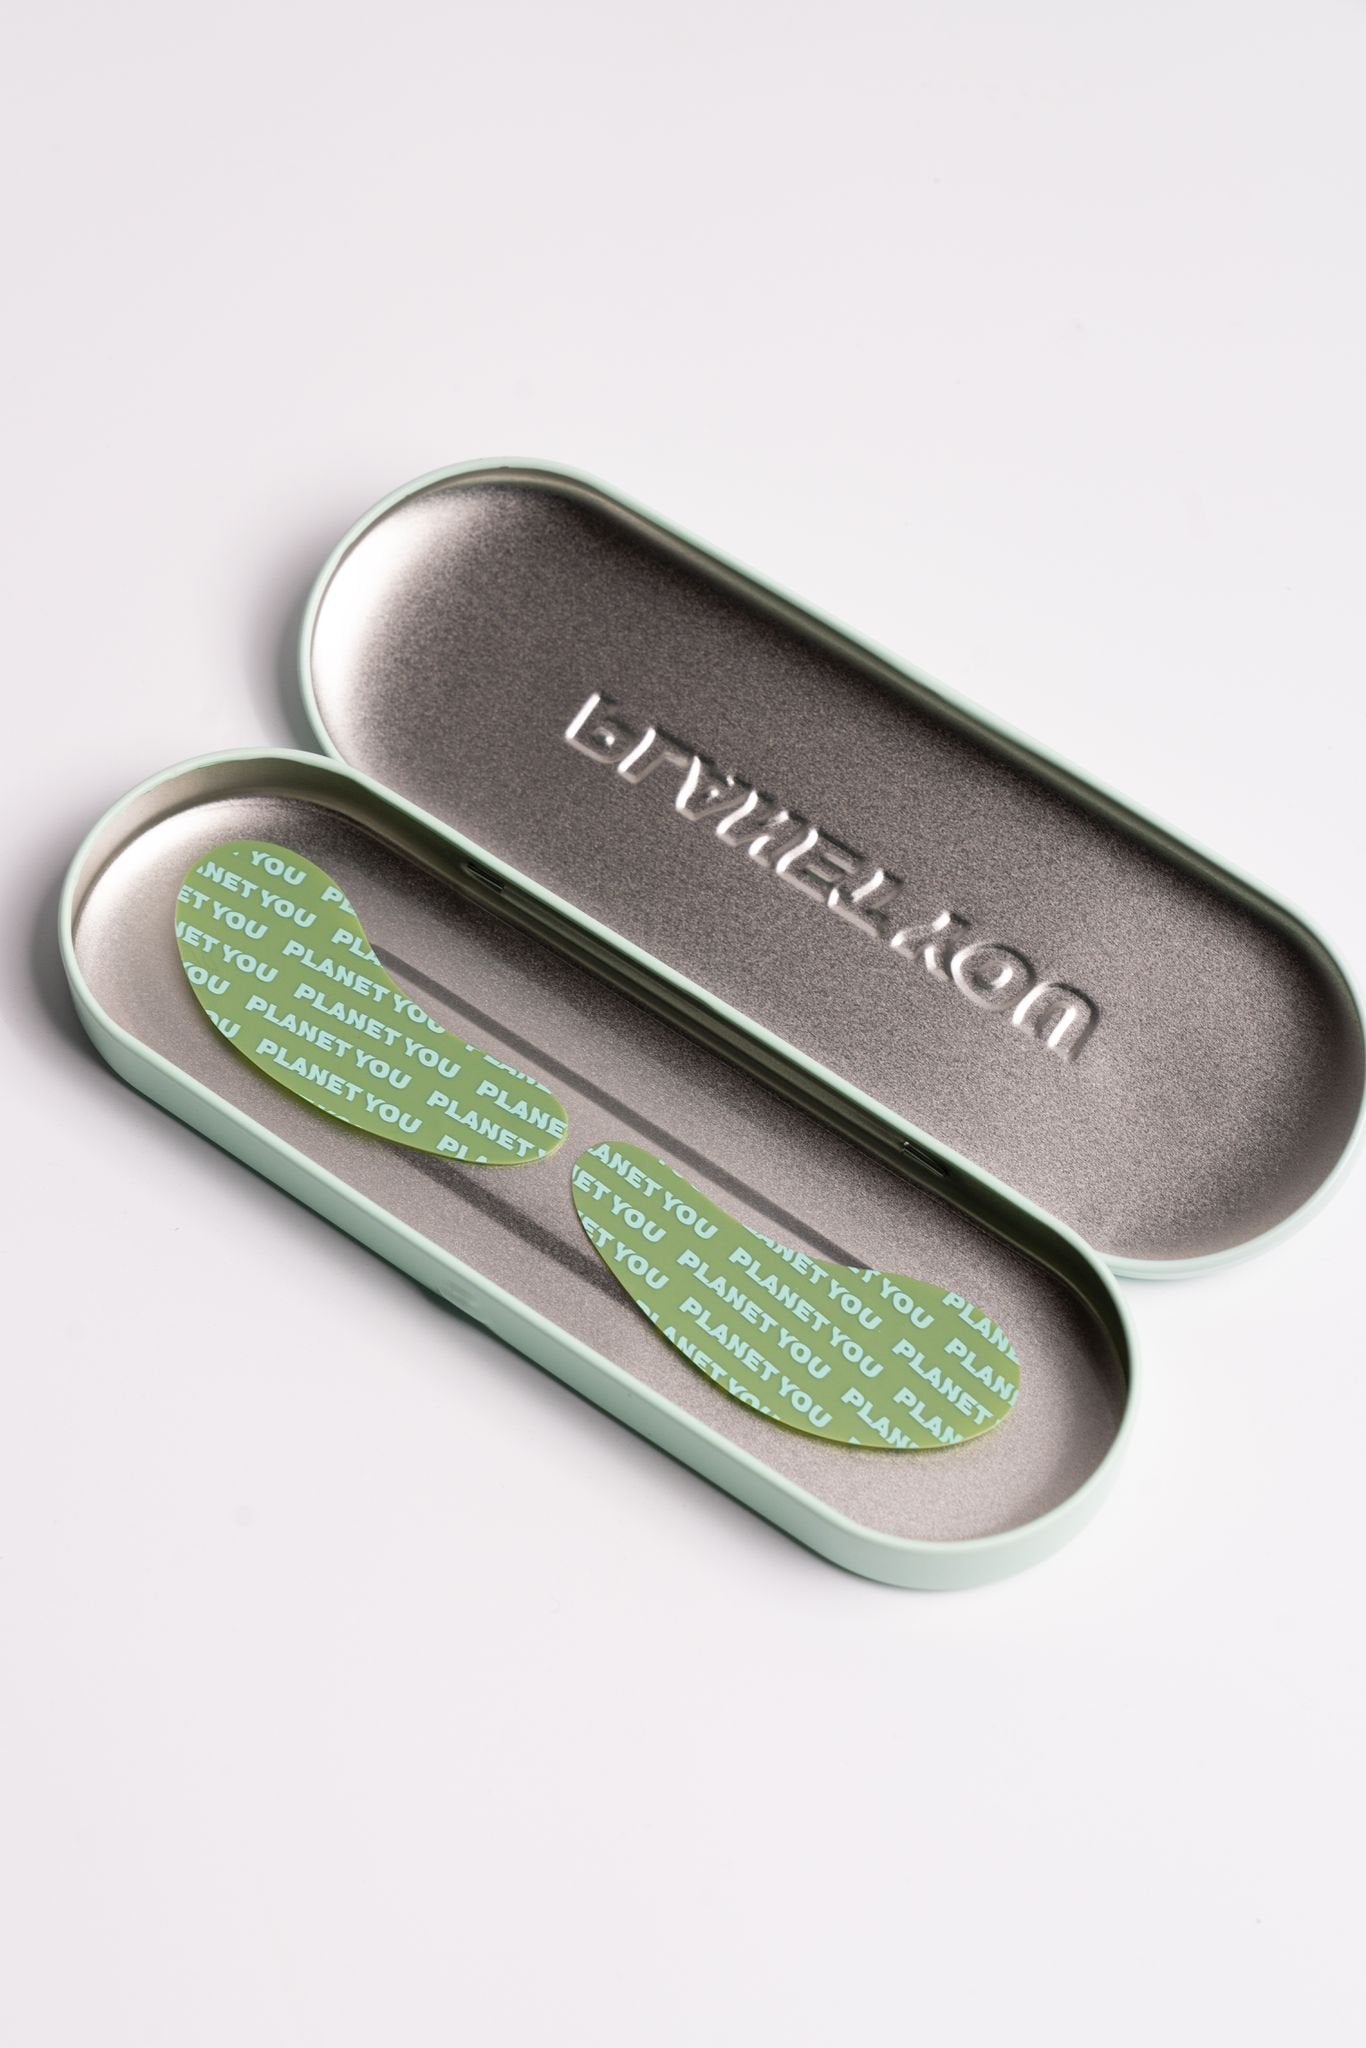 vegan reusable silicone under eye patches in tin aluminum case